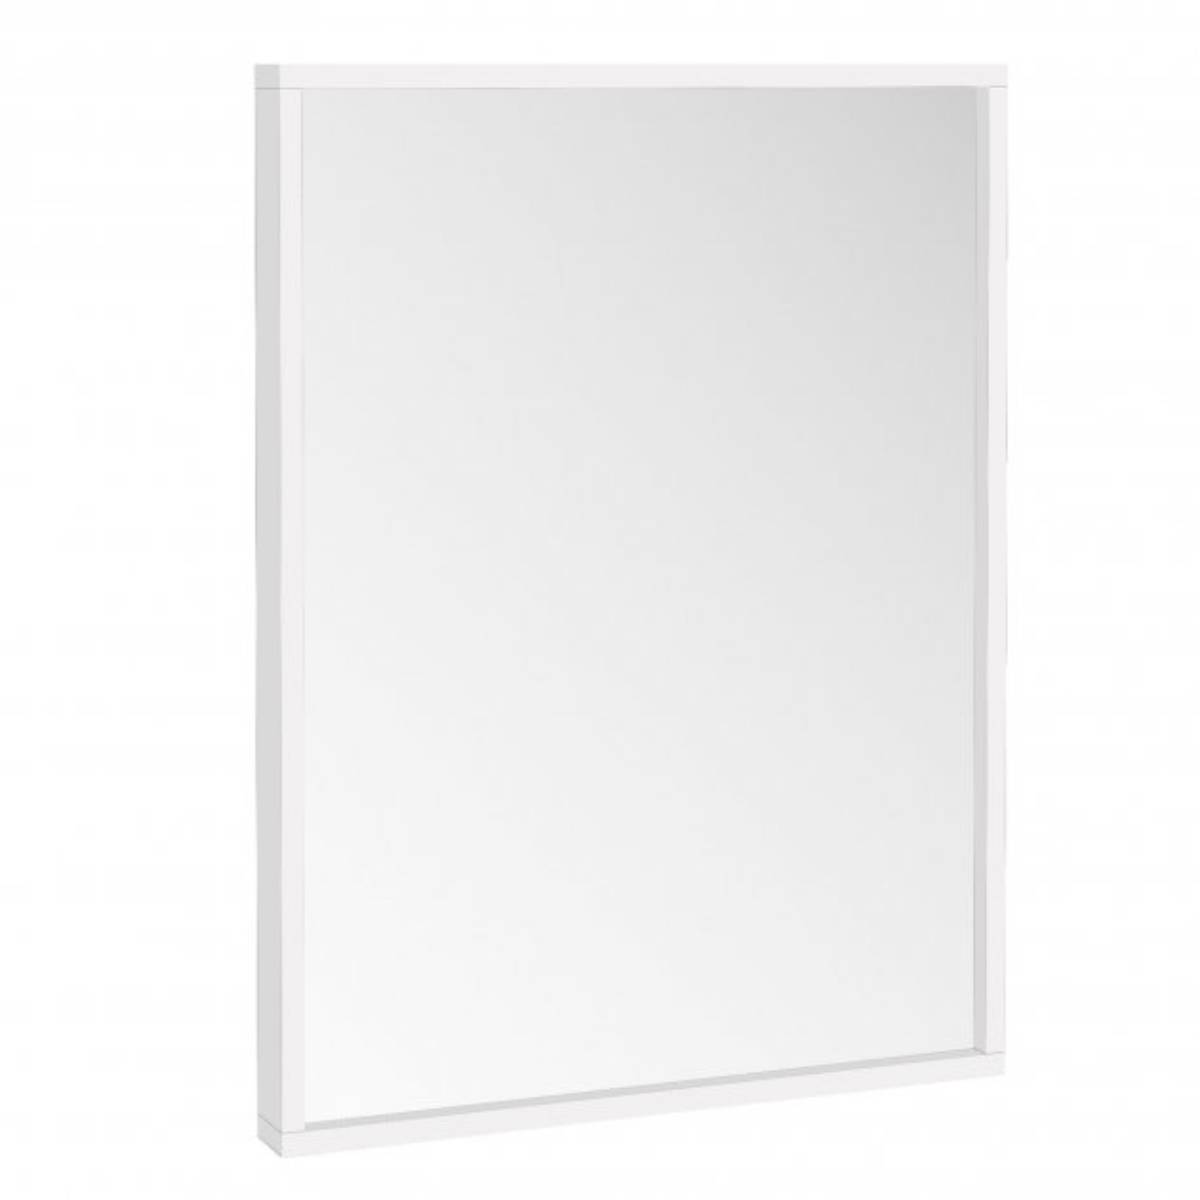 Ambience 600 x 800mm Simplistic Mirror - White (13155)